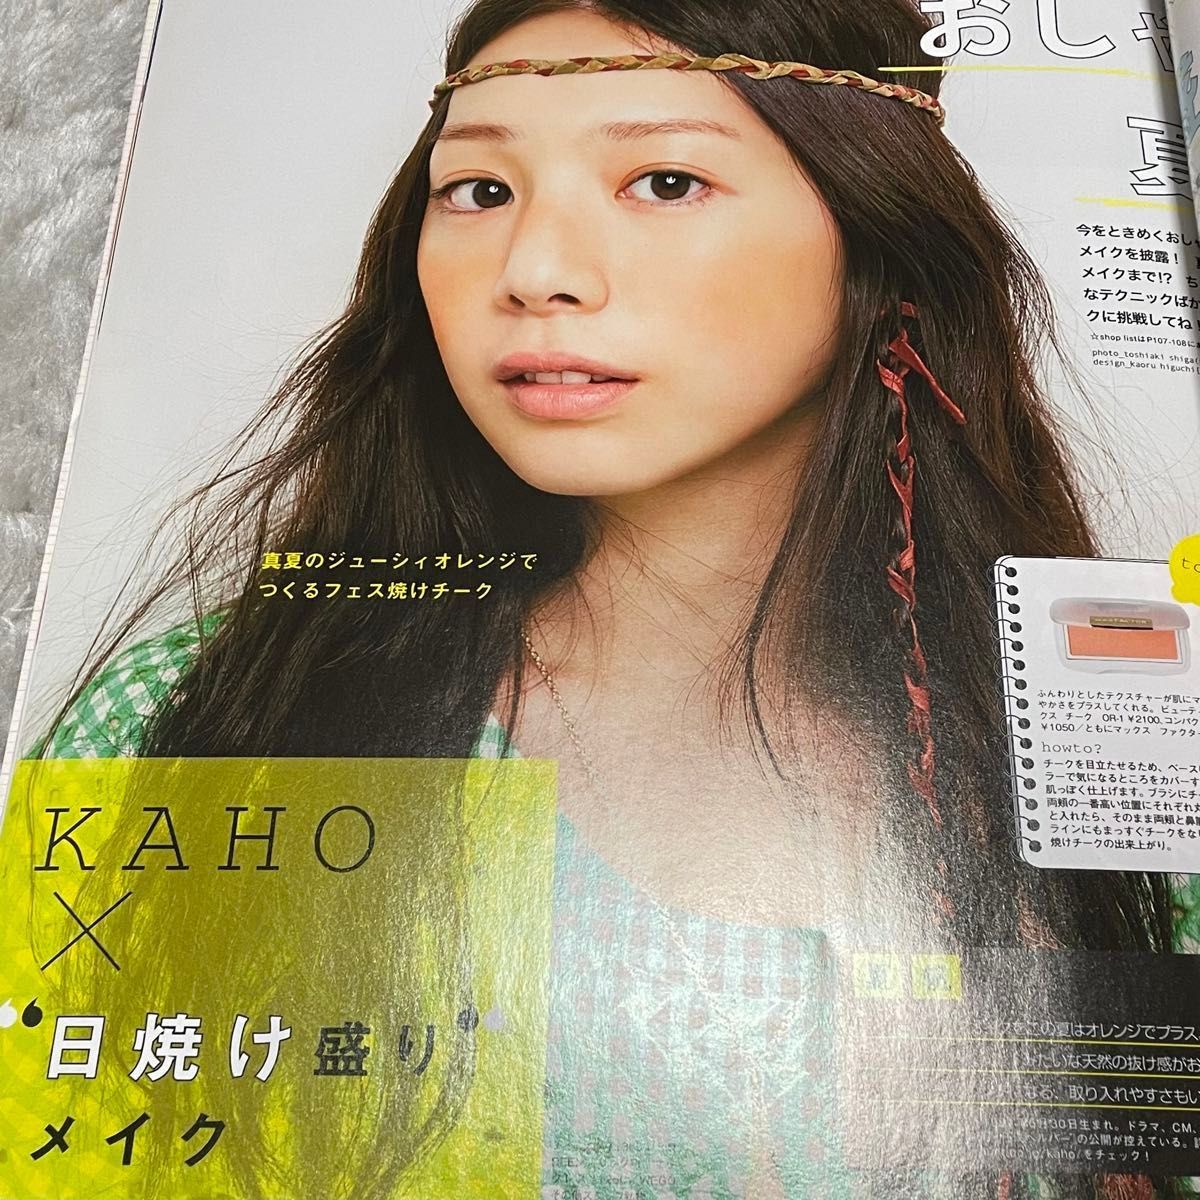 zipper ジッパー 水原希子表紙 2012年８月　ファッション雑誌 aiko 星野源 B1A4